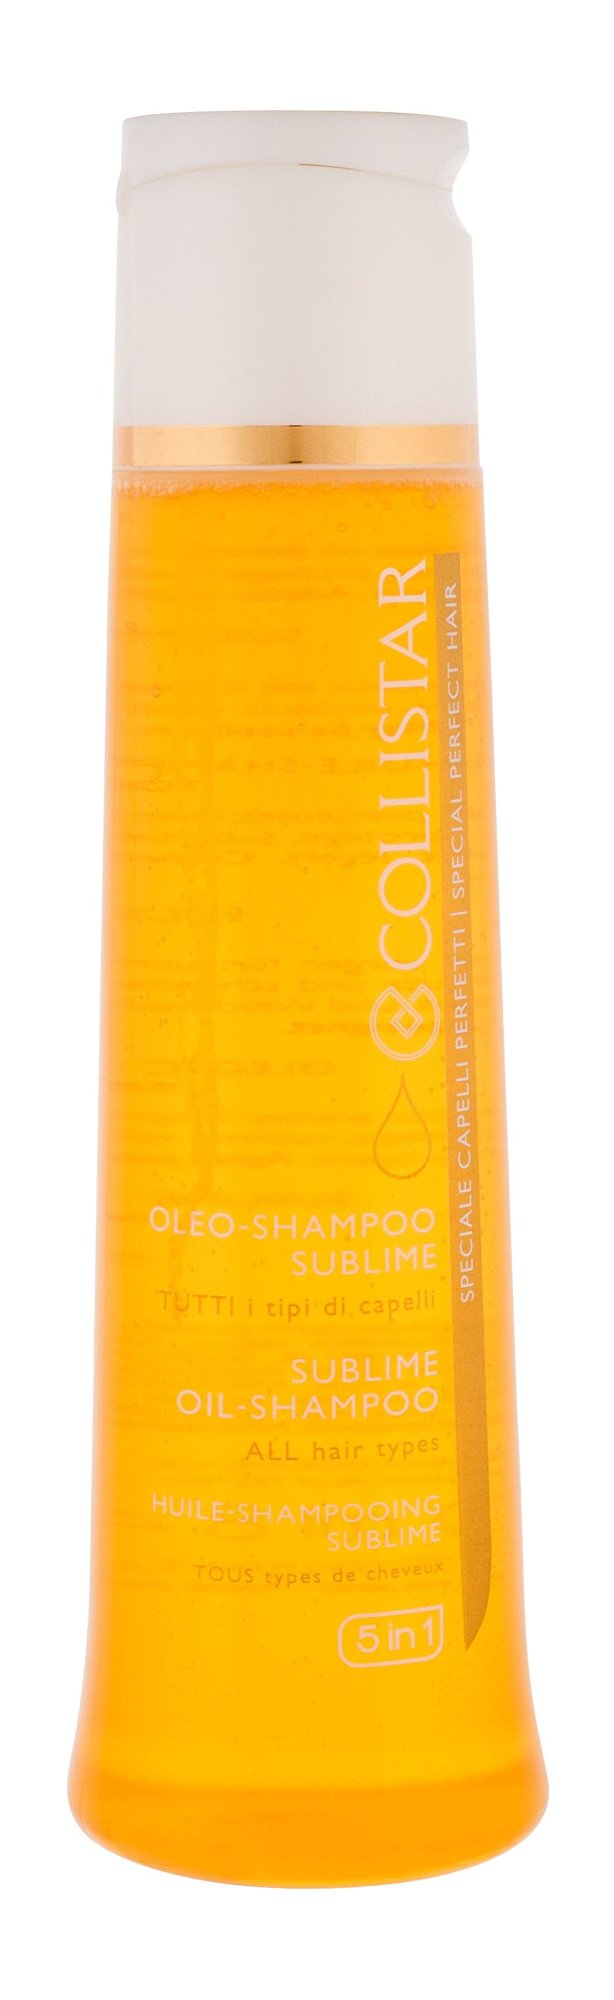 Collistar Sublime Oil Line 5in1 250ml šampūnas